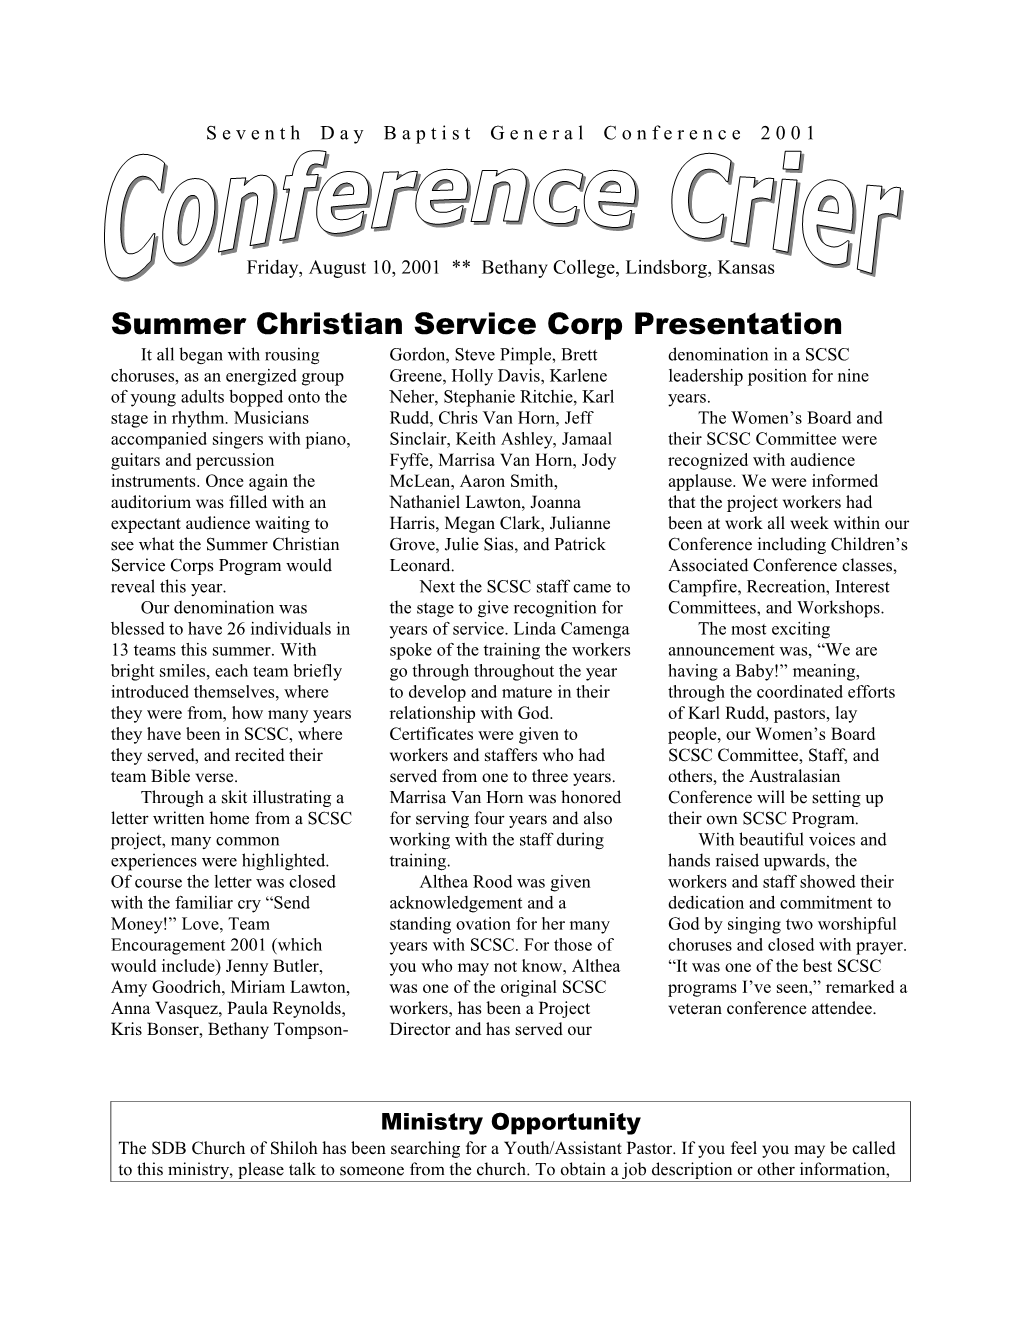 Summer Christian Service Corp Presentation